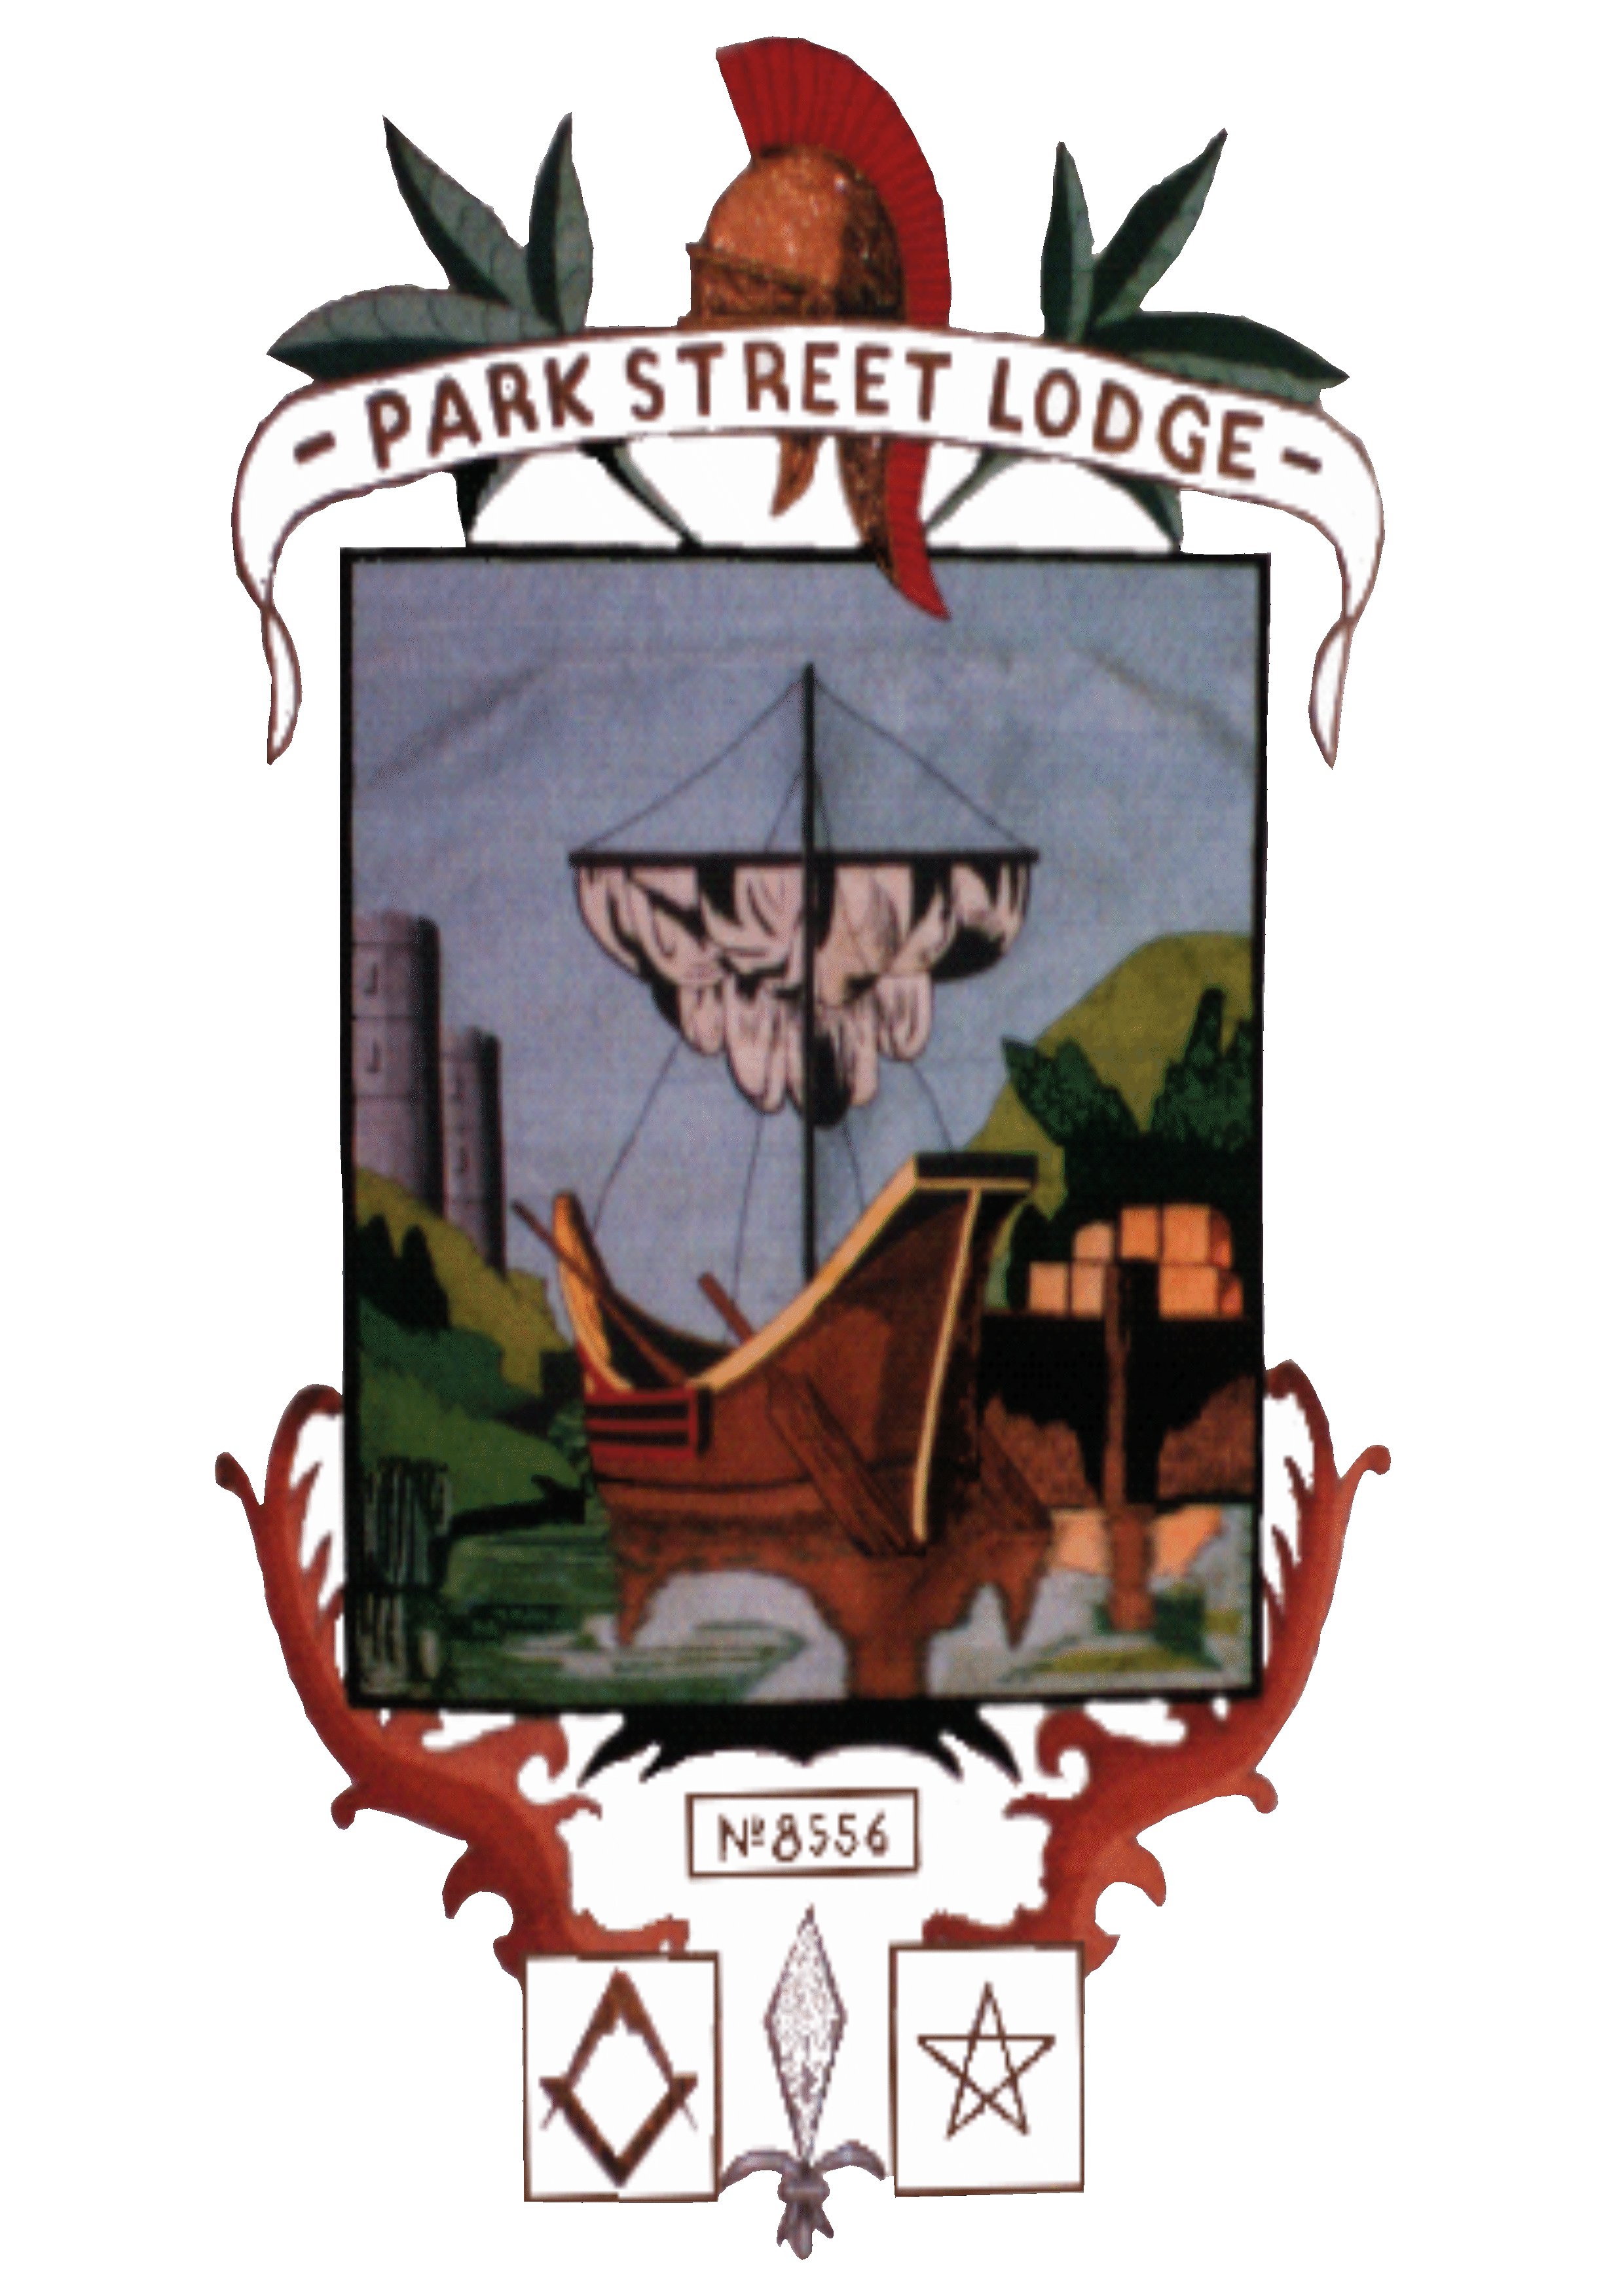 Park Street Lodge No 8556